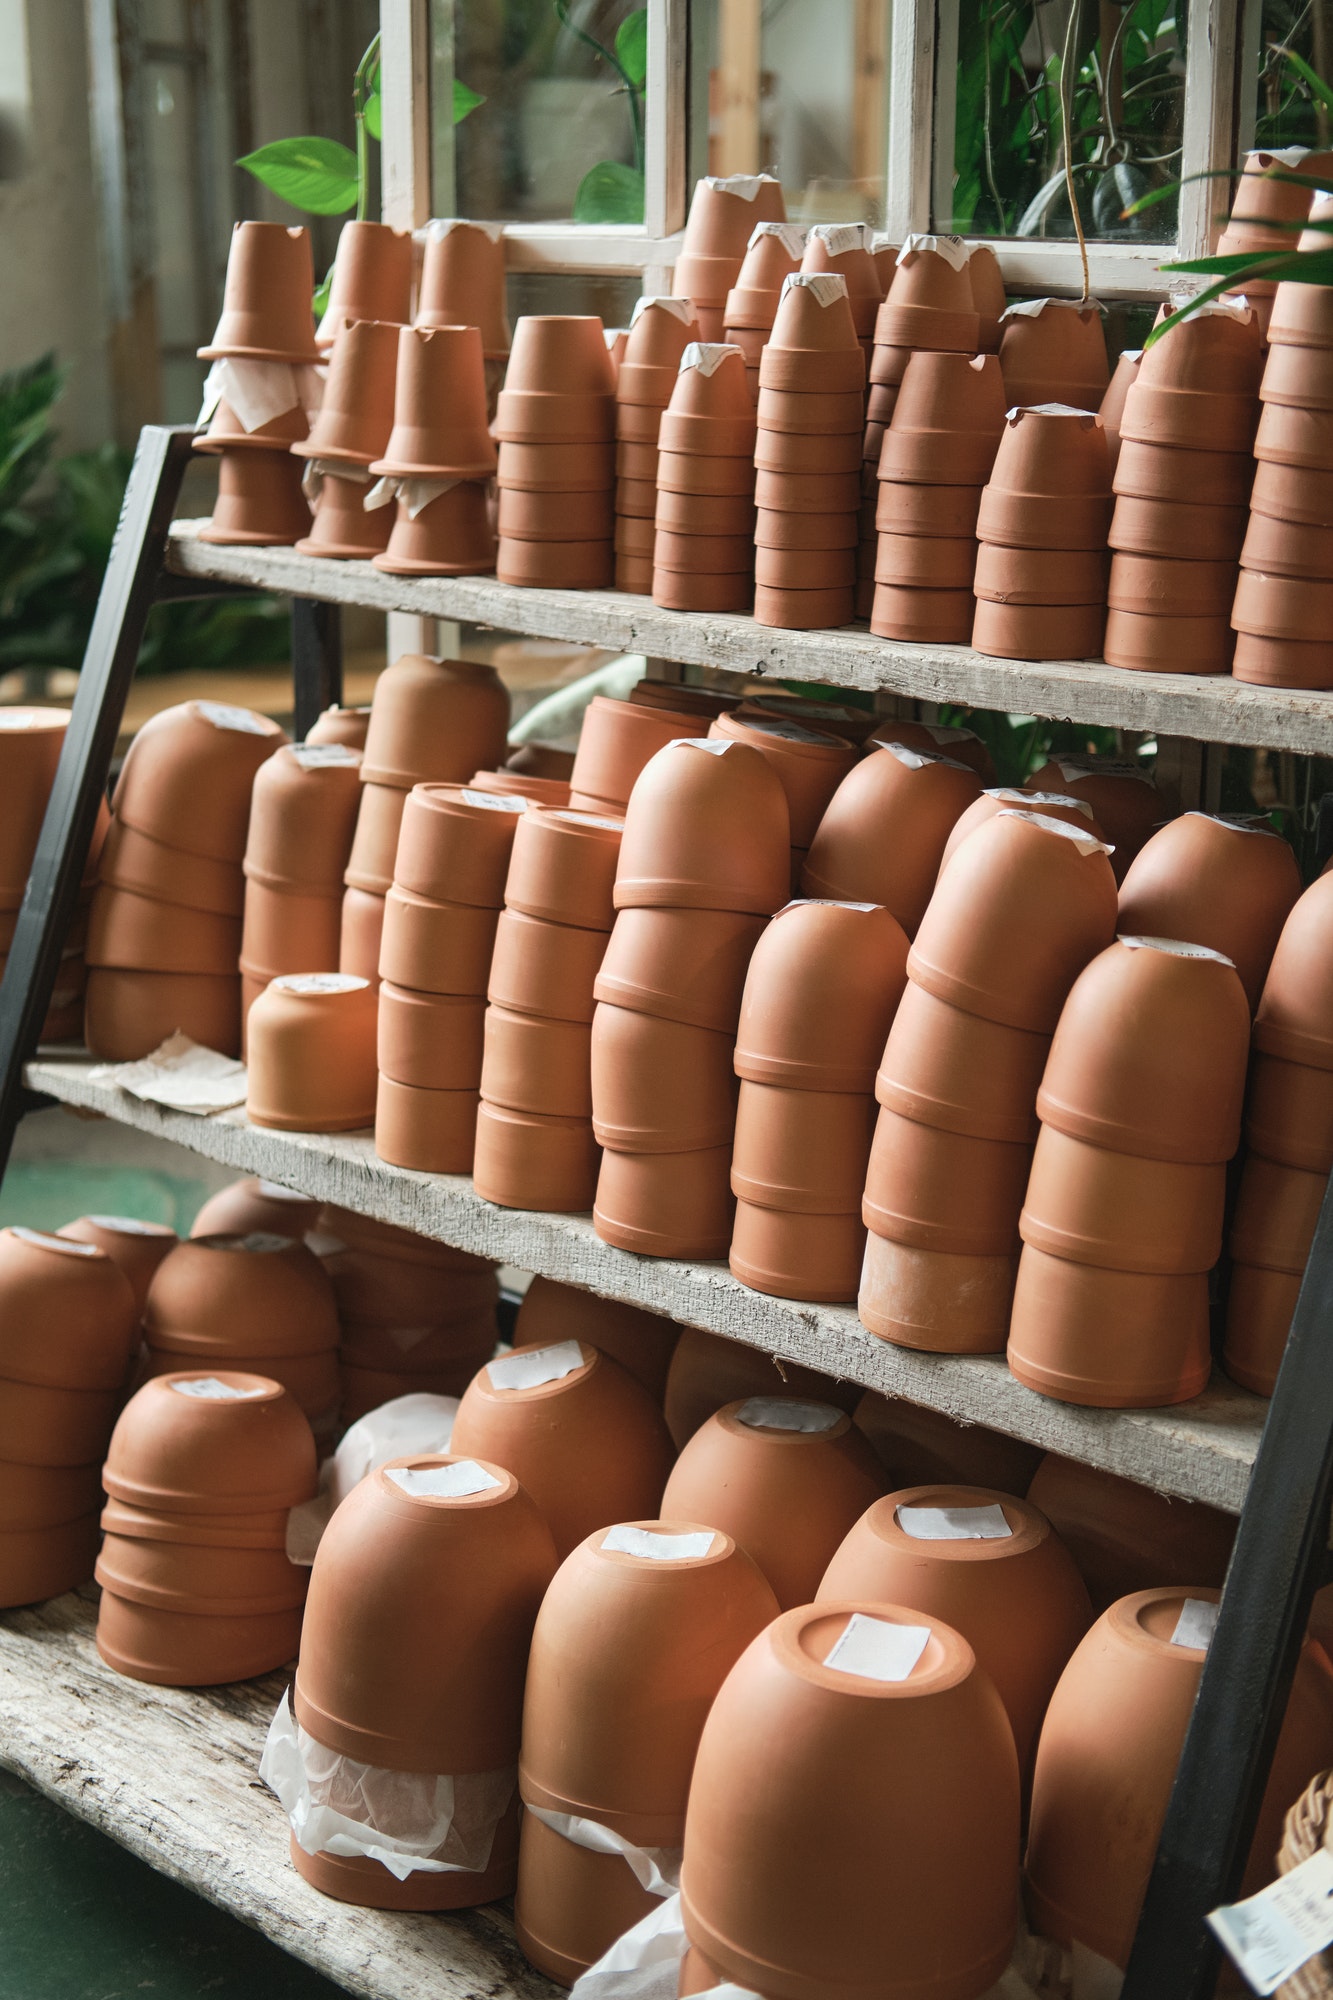 Ceramic pots in the shop